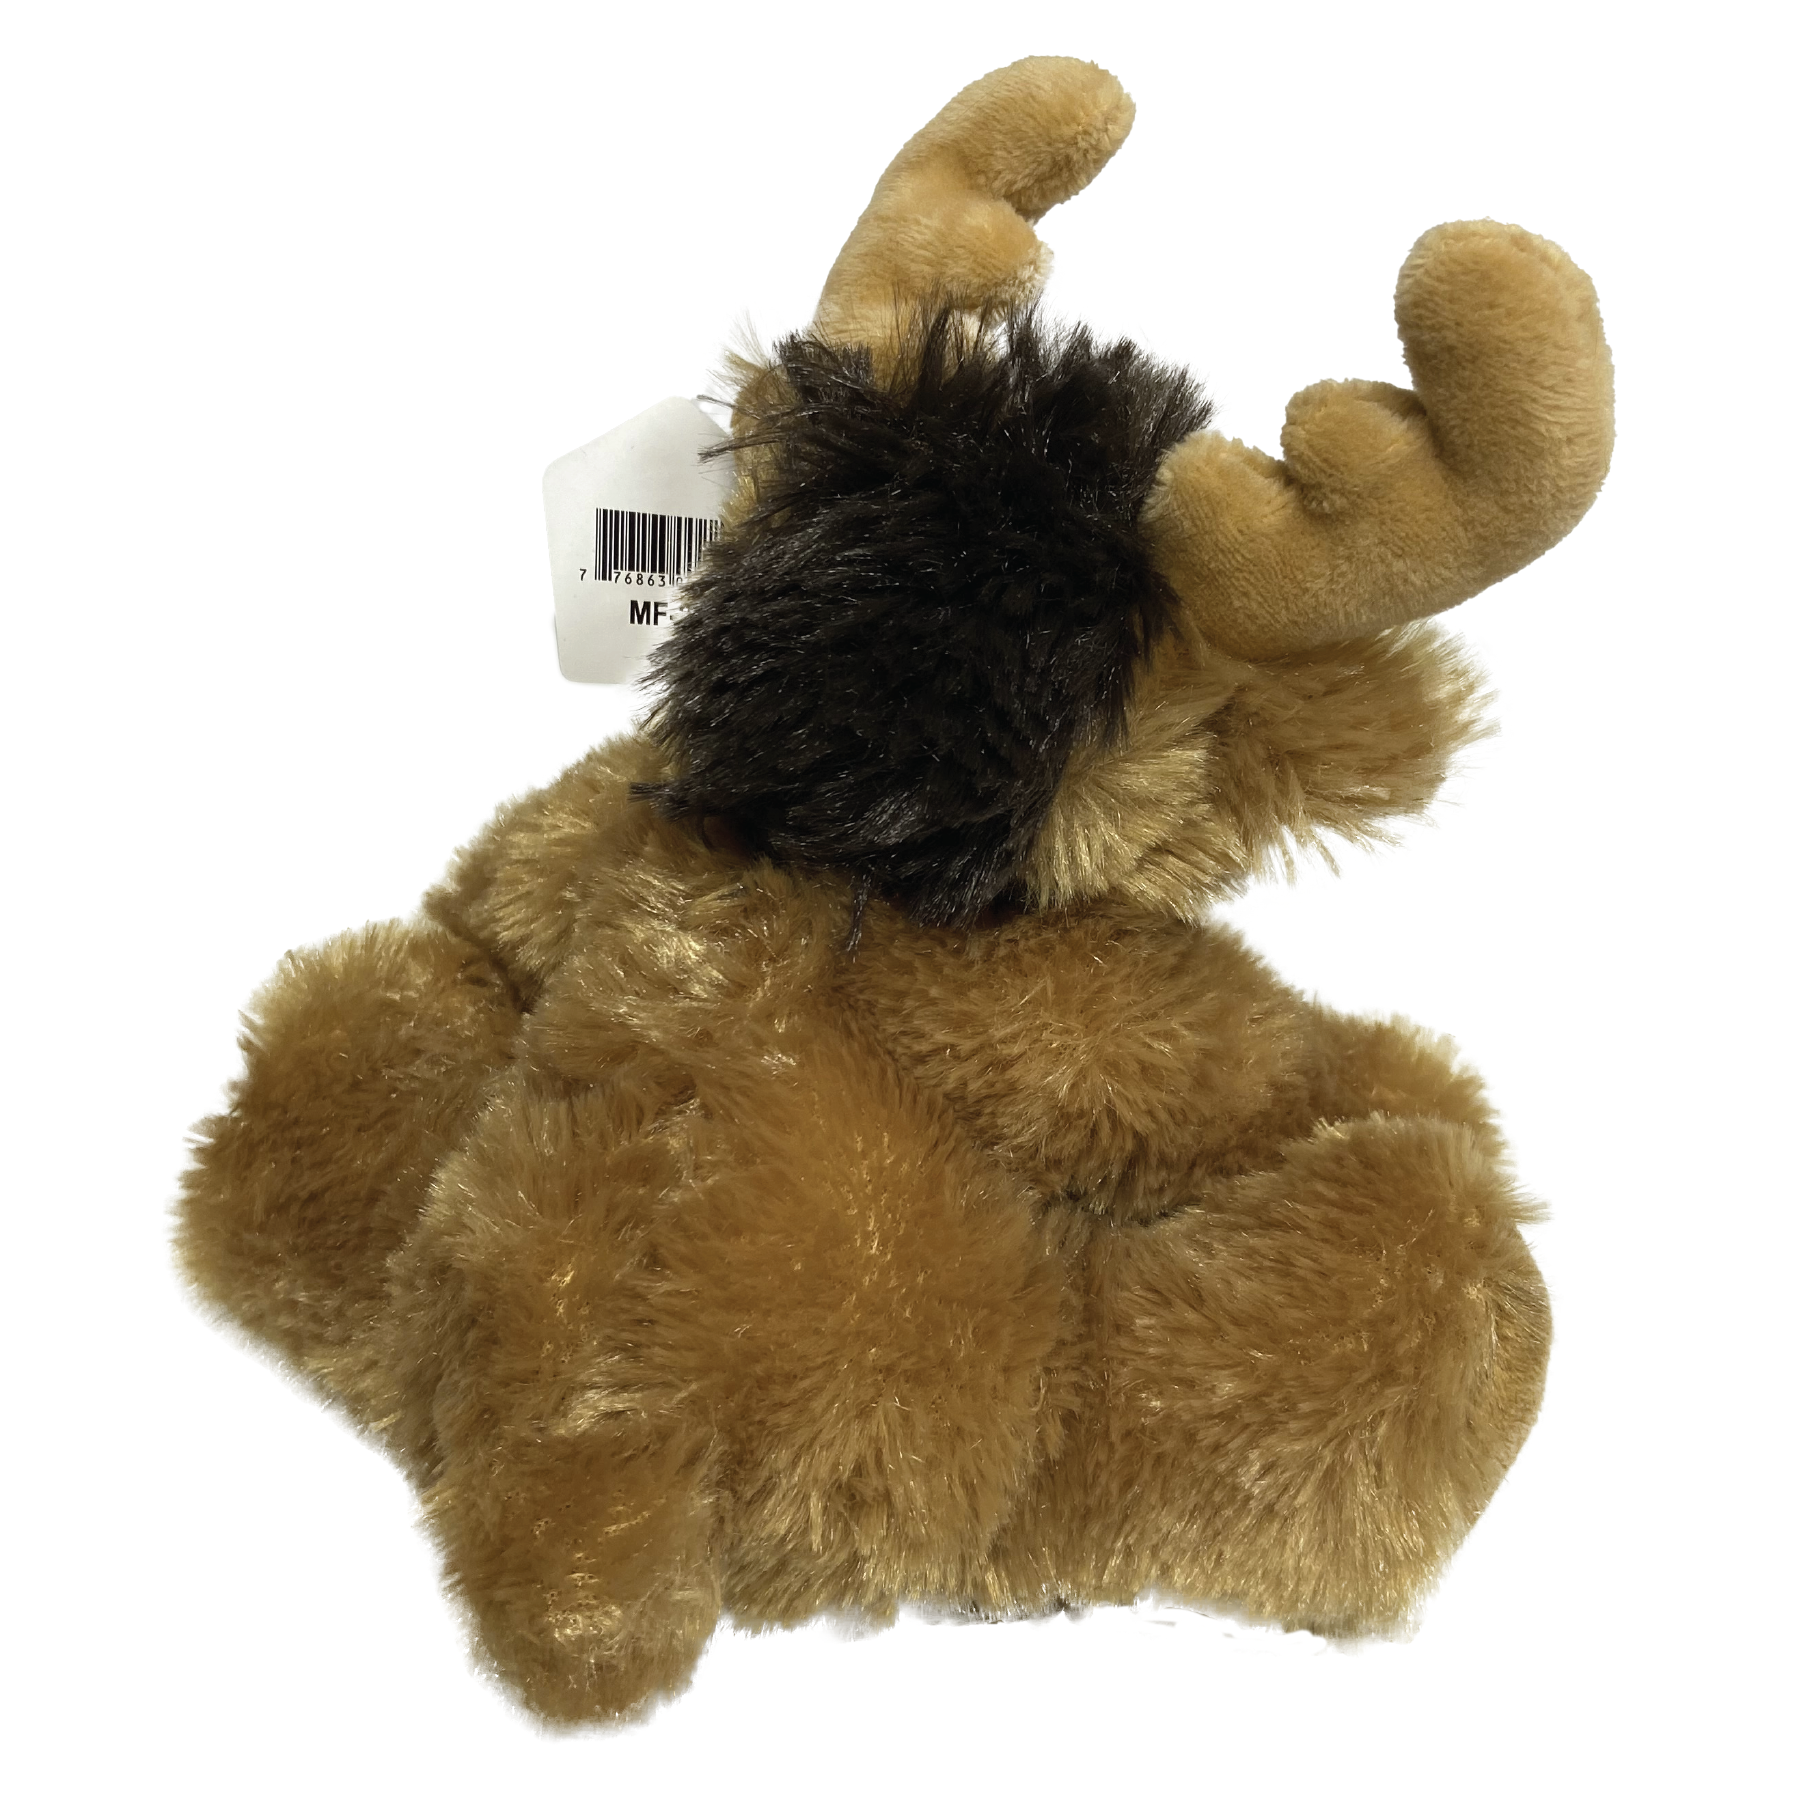 7" Maplefoot Moose stuffed animal side view